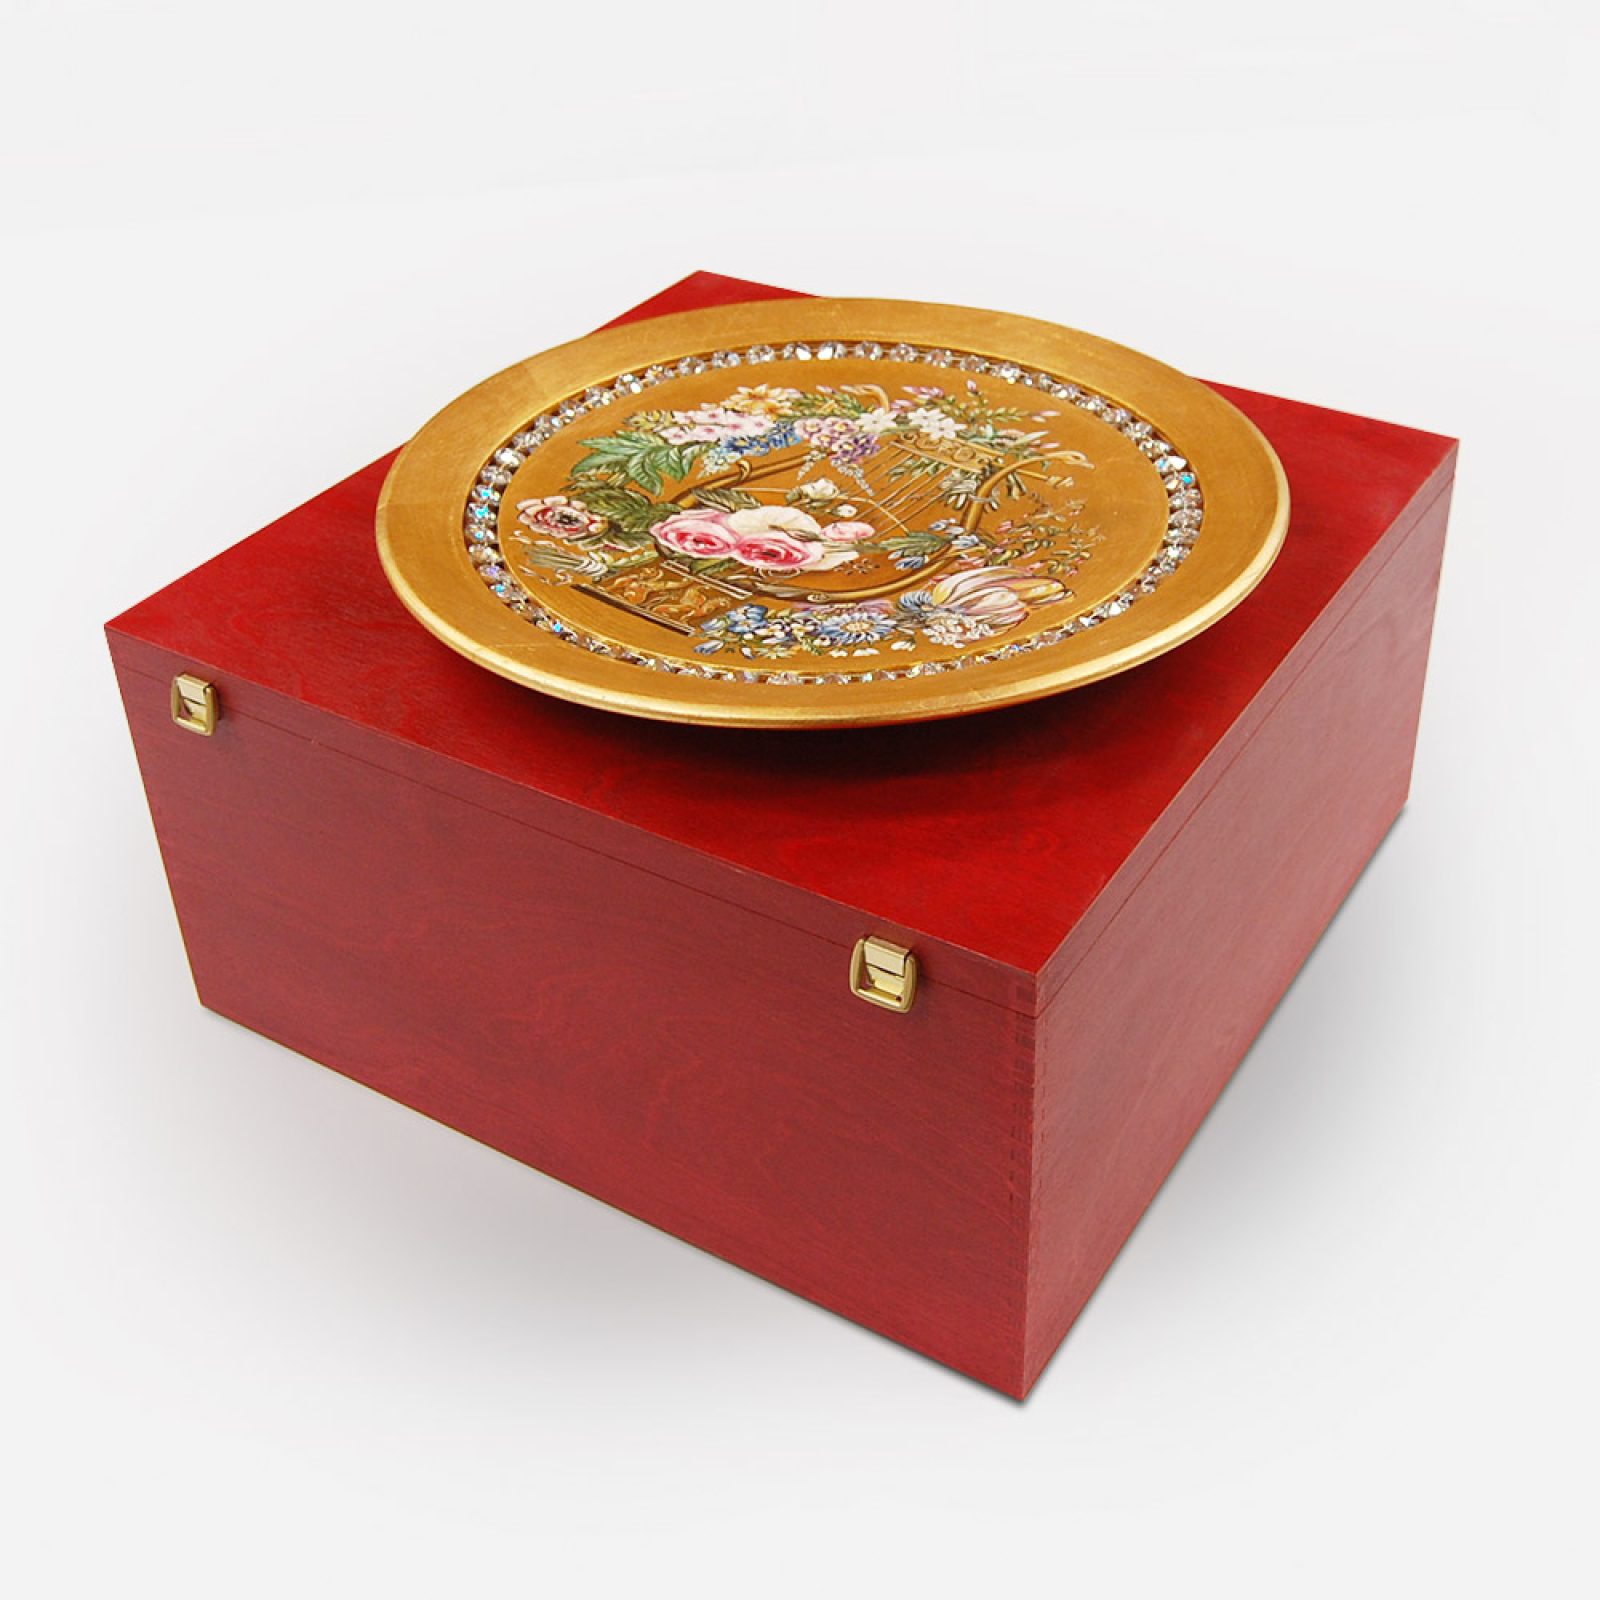 Kalomira - In Luxury wooden gift box | Natalis Luxus